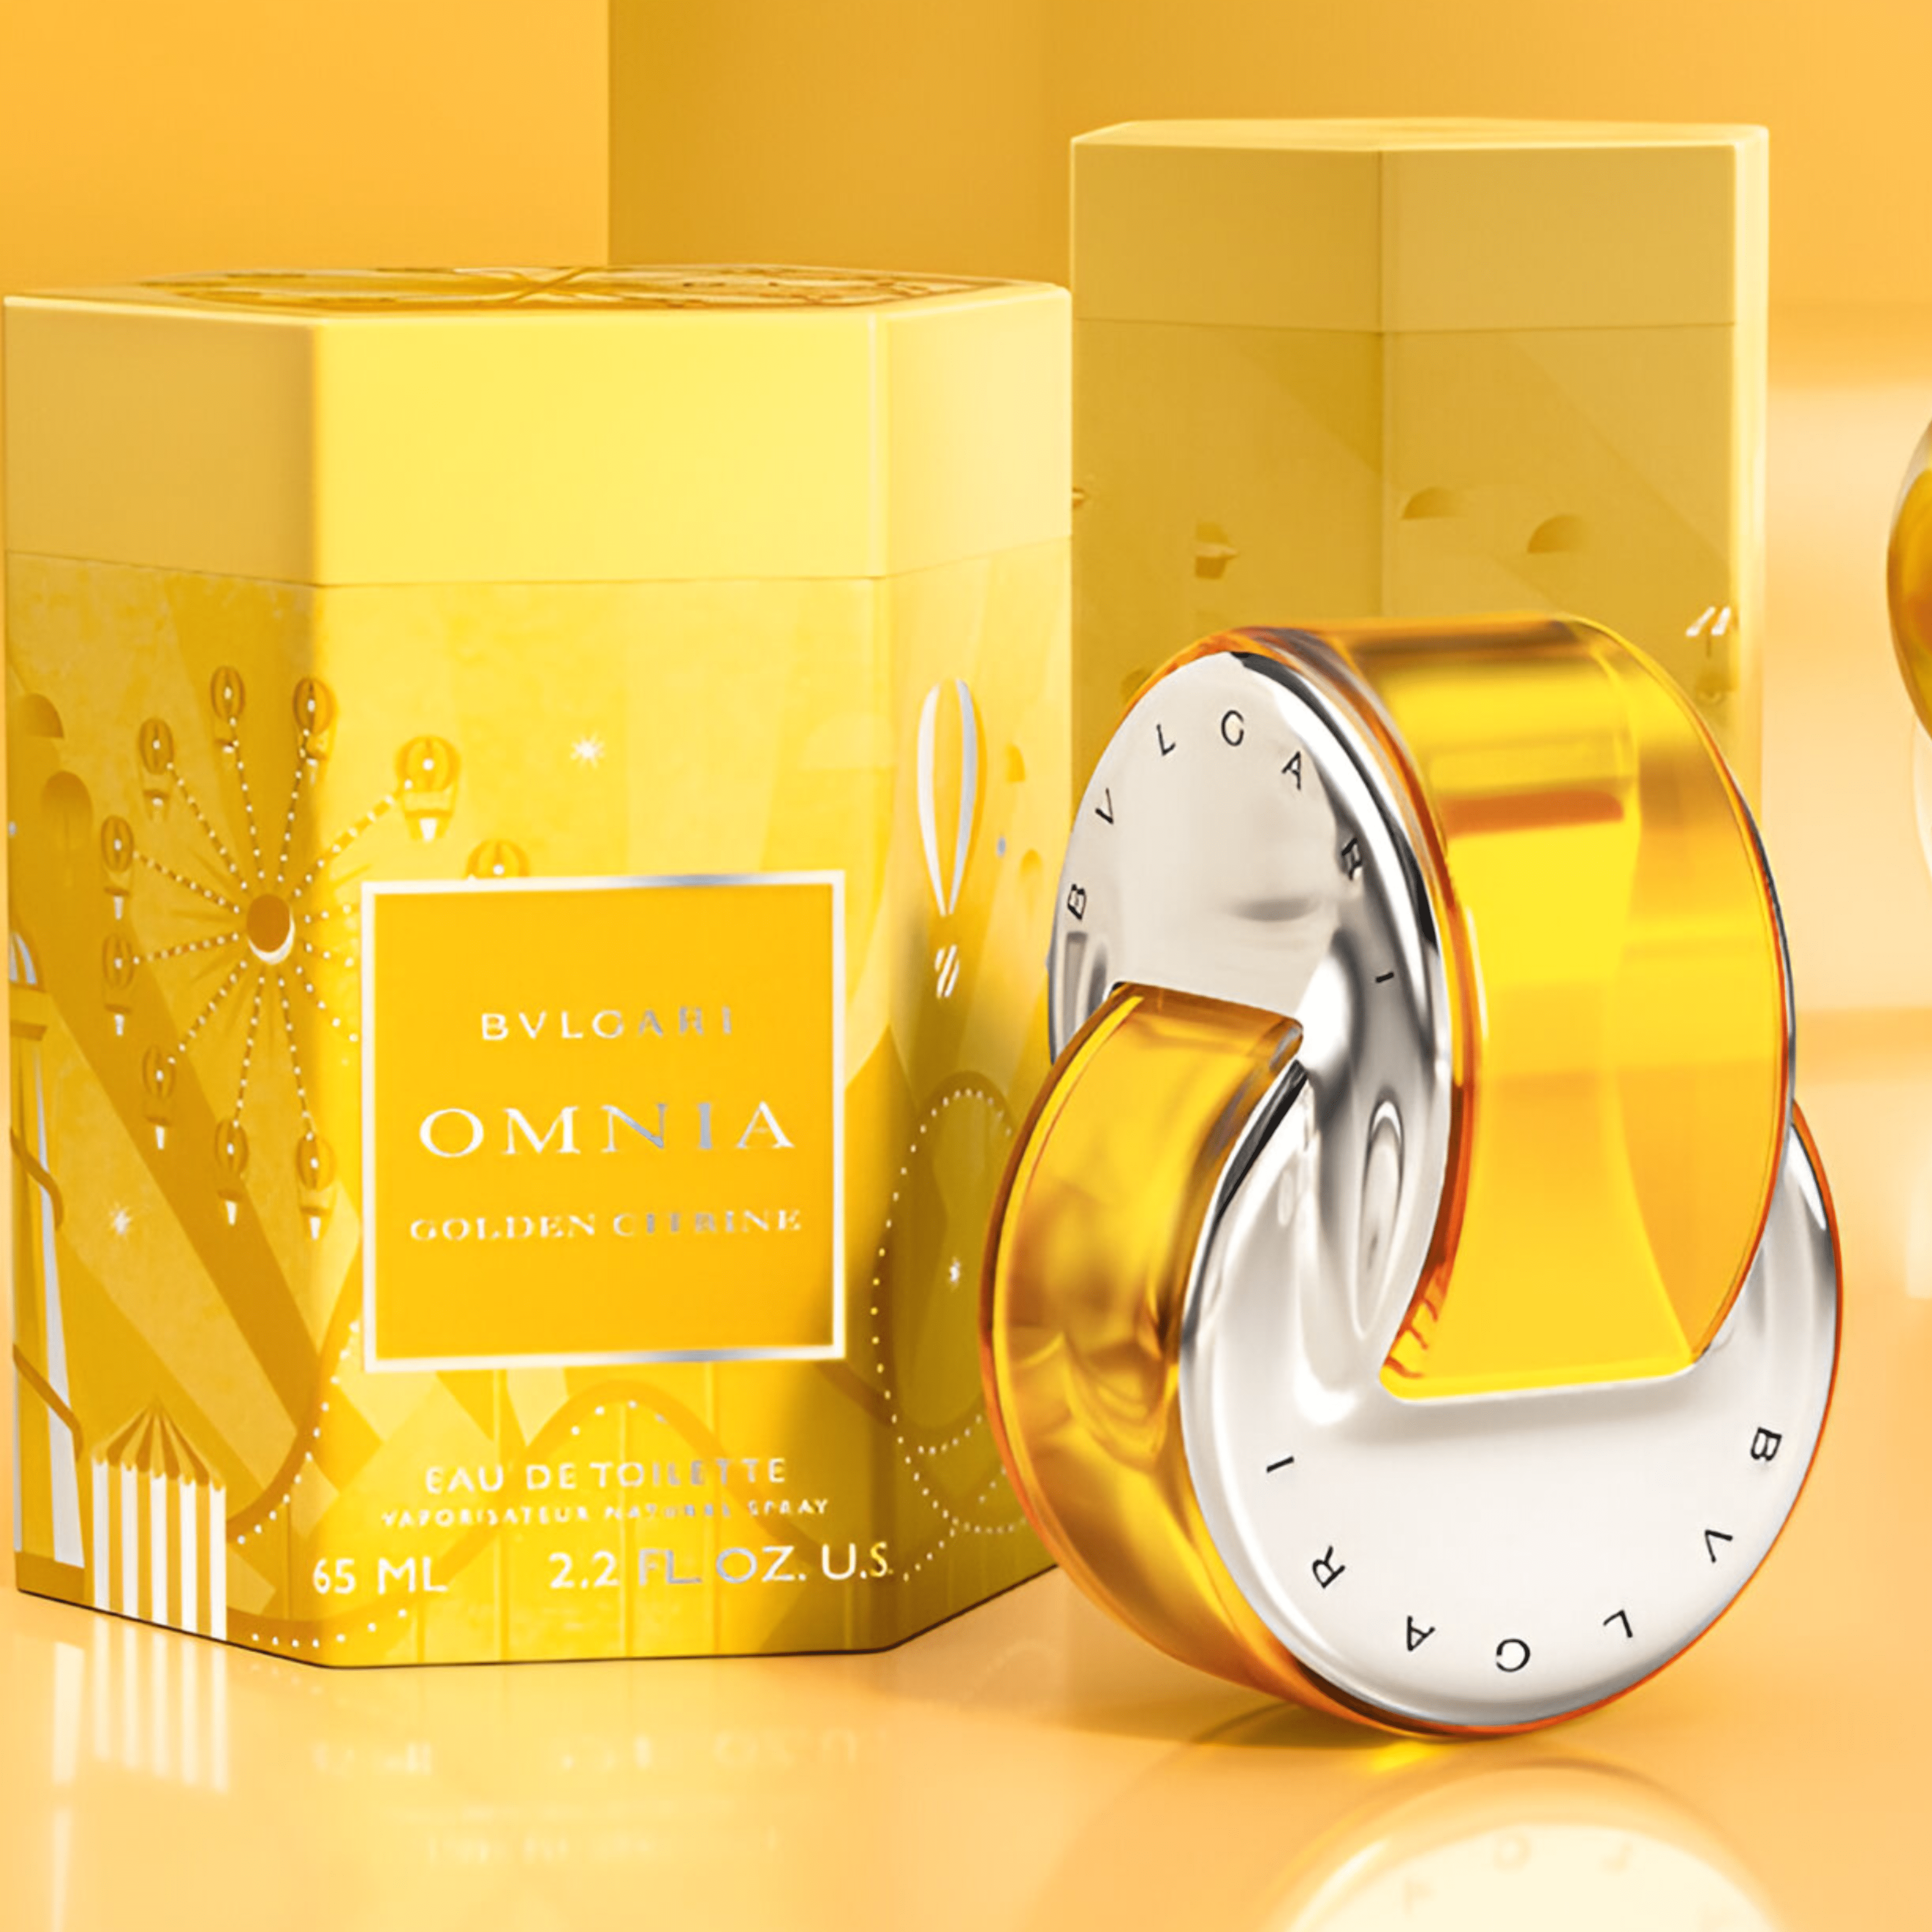 Bvlgari Omnia Golden Citrine EDT | My Perfume Shop Australia